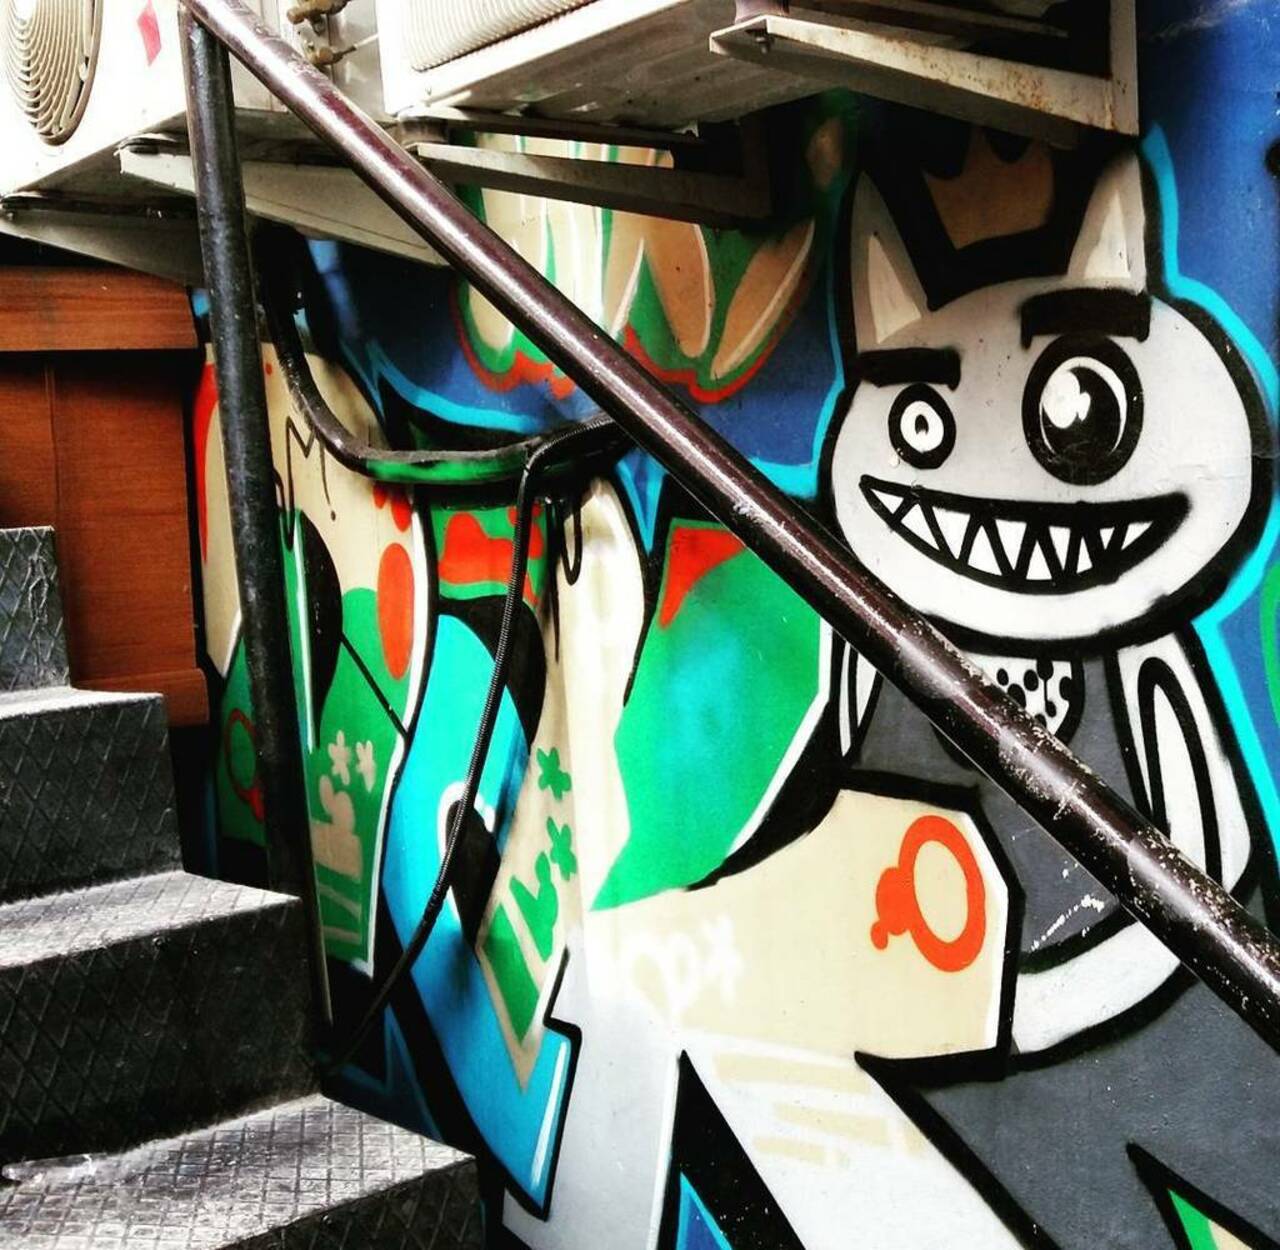 #dsb_graff @rsa_graffiti #ingf@streetawesome #streetart #urbanart #graffitiart #graffiti #instagraffiti #streetartp… https://t.co/jyD8qOpzV7